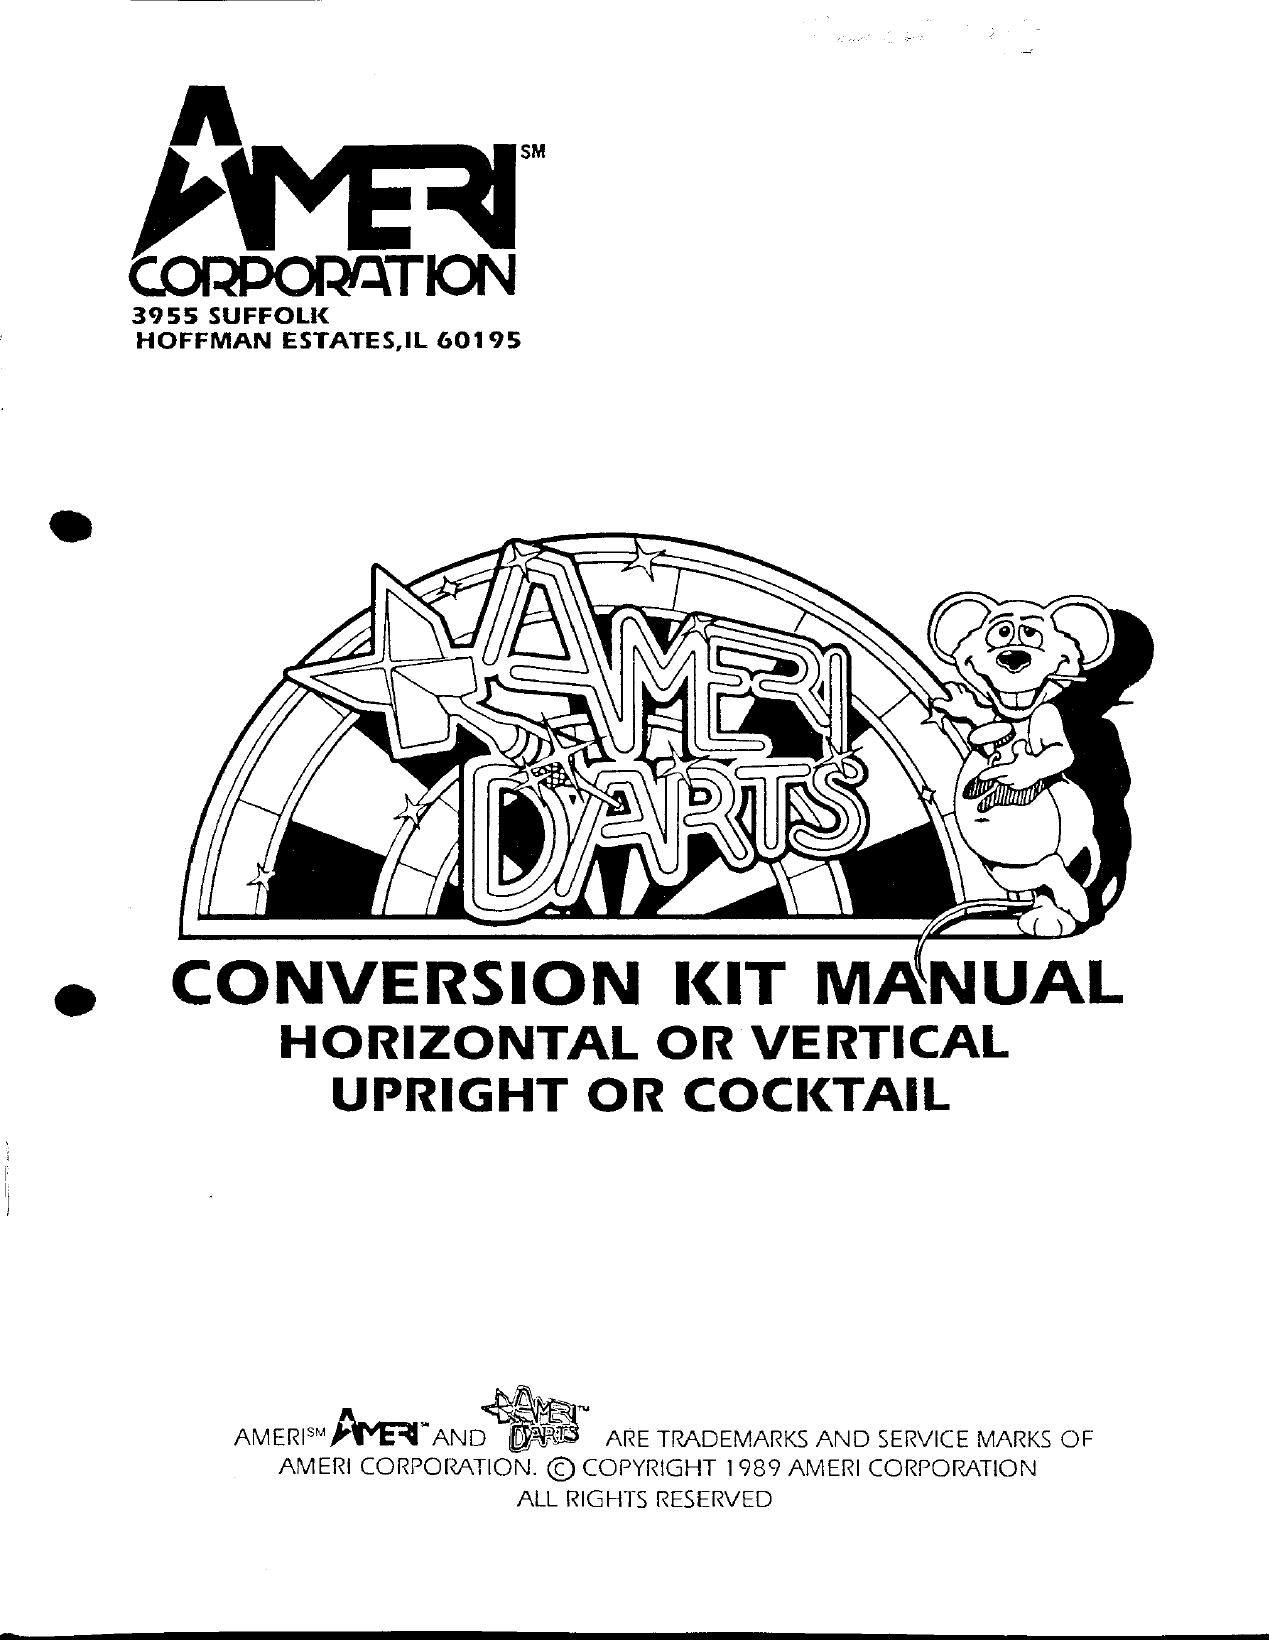 Ameri Darts Conversion Kit